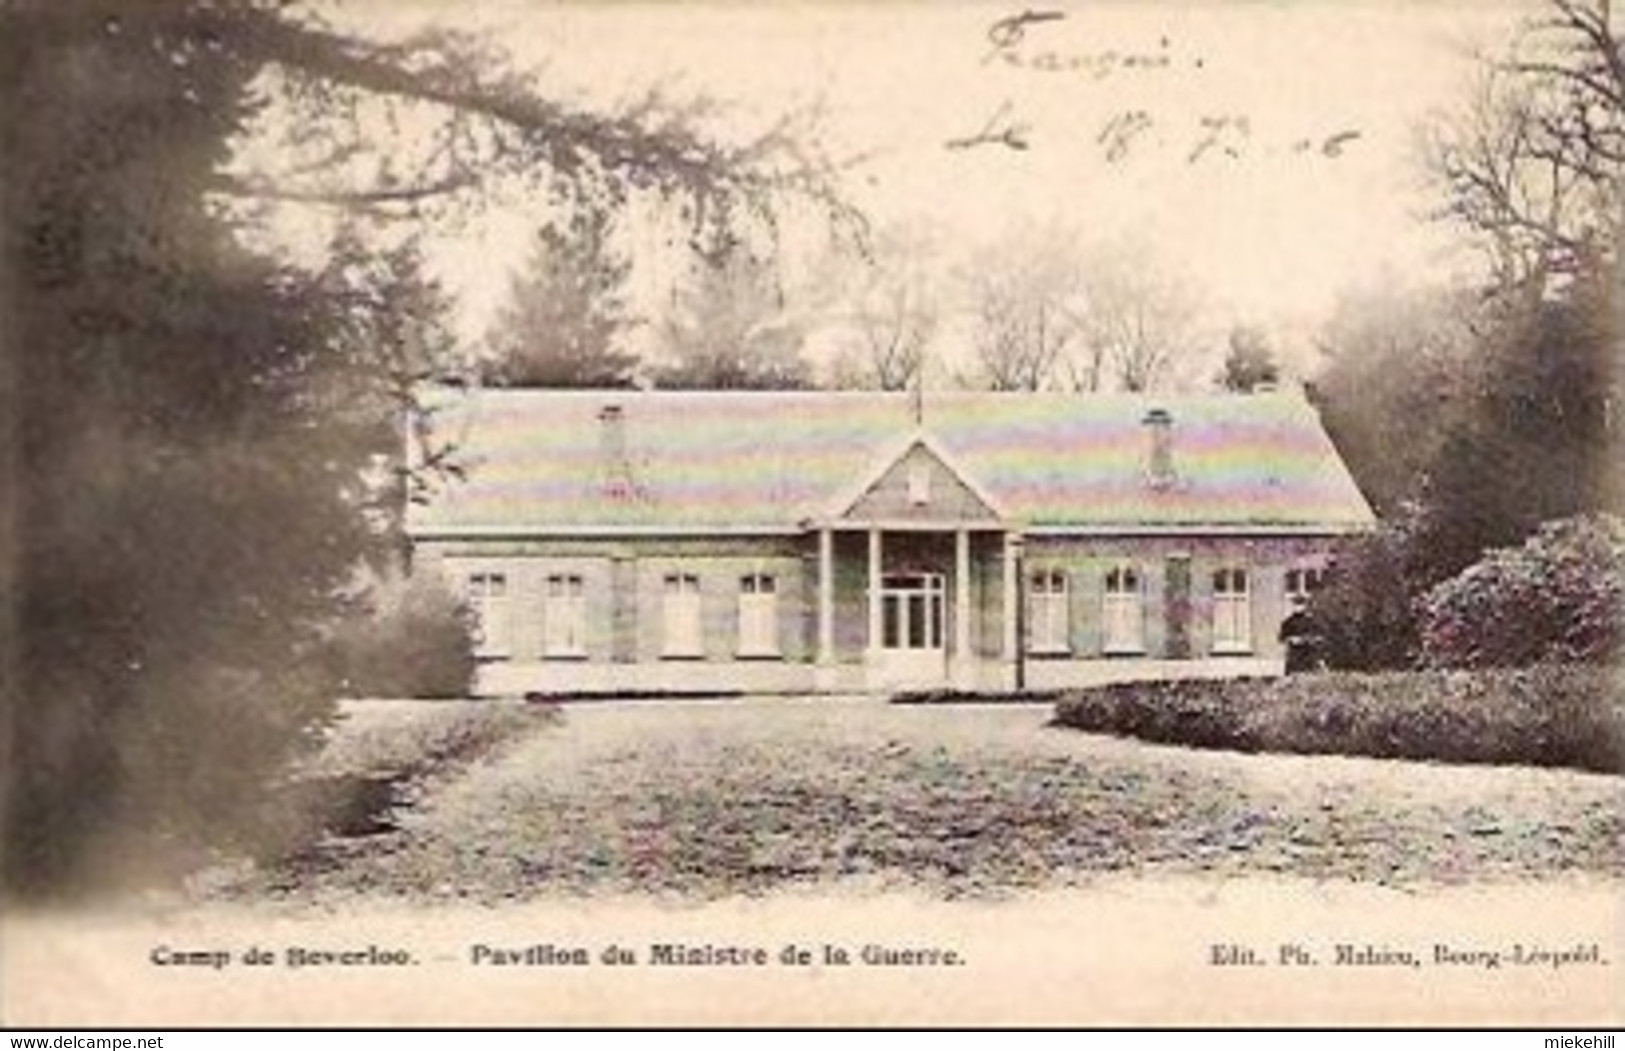 CAMP DE BEVERLOO-PAVILLON DU MINISTRE DE LA GUERRE - Leopoldsburg (Beverloo Camp)